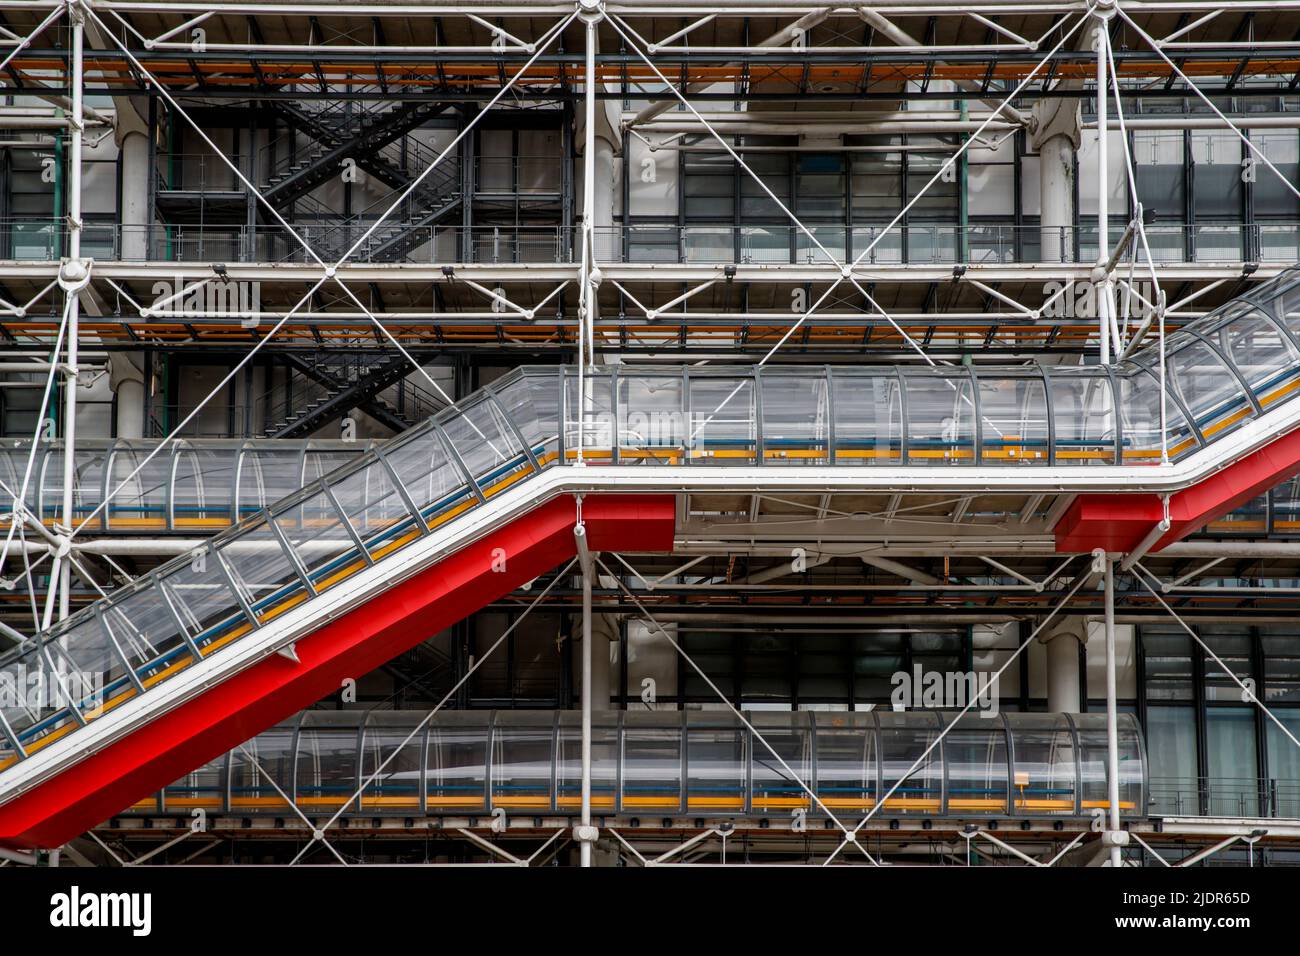 The exterior of the Pompidou Centre, Paris, France, Wednesday, May 25, 2022.Photo: David Rowland / One-Image.com Stock Photo